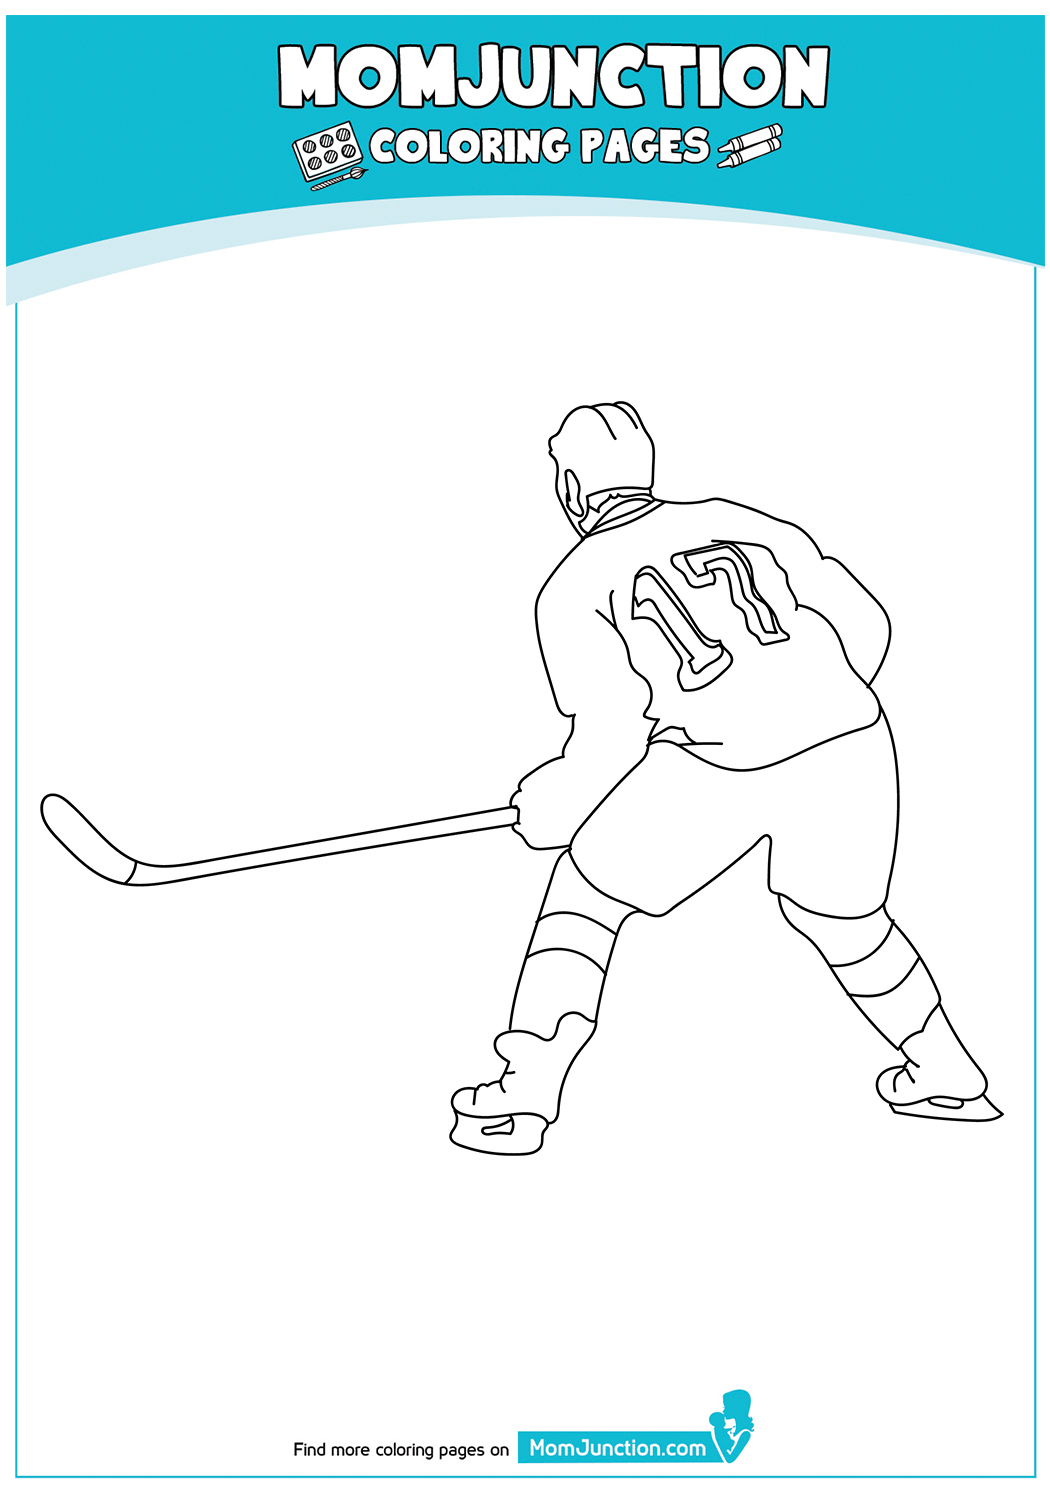 The-Intense-Hockey-Player-17